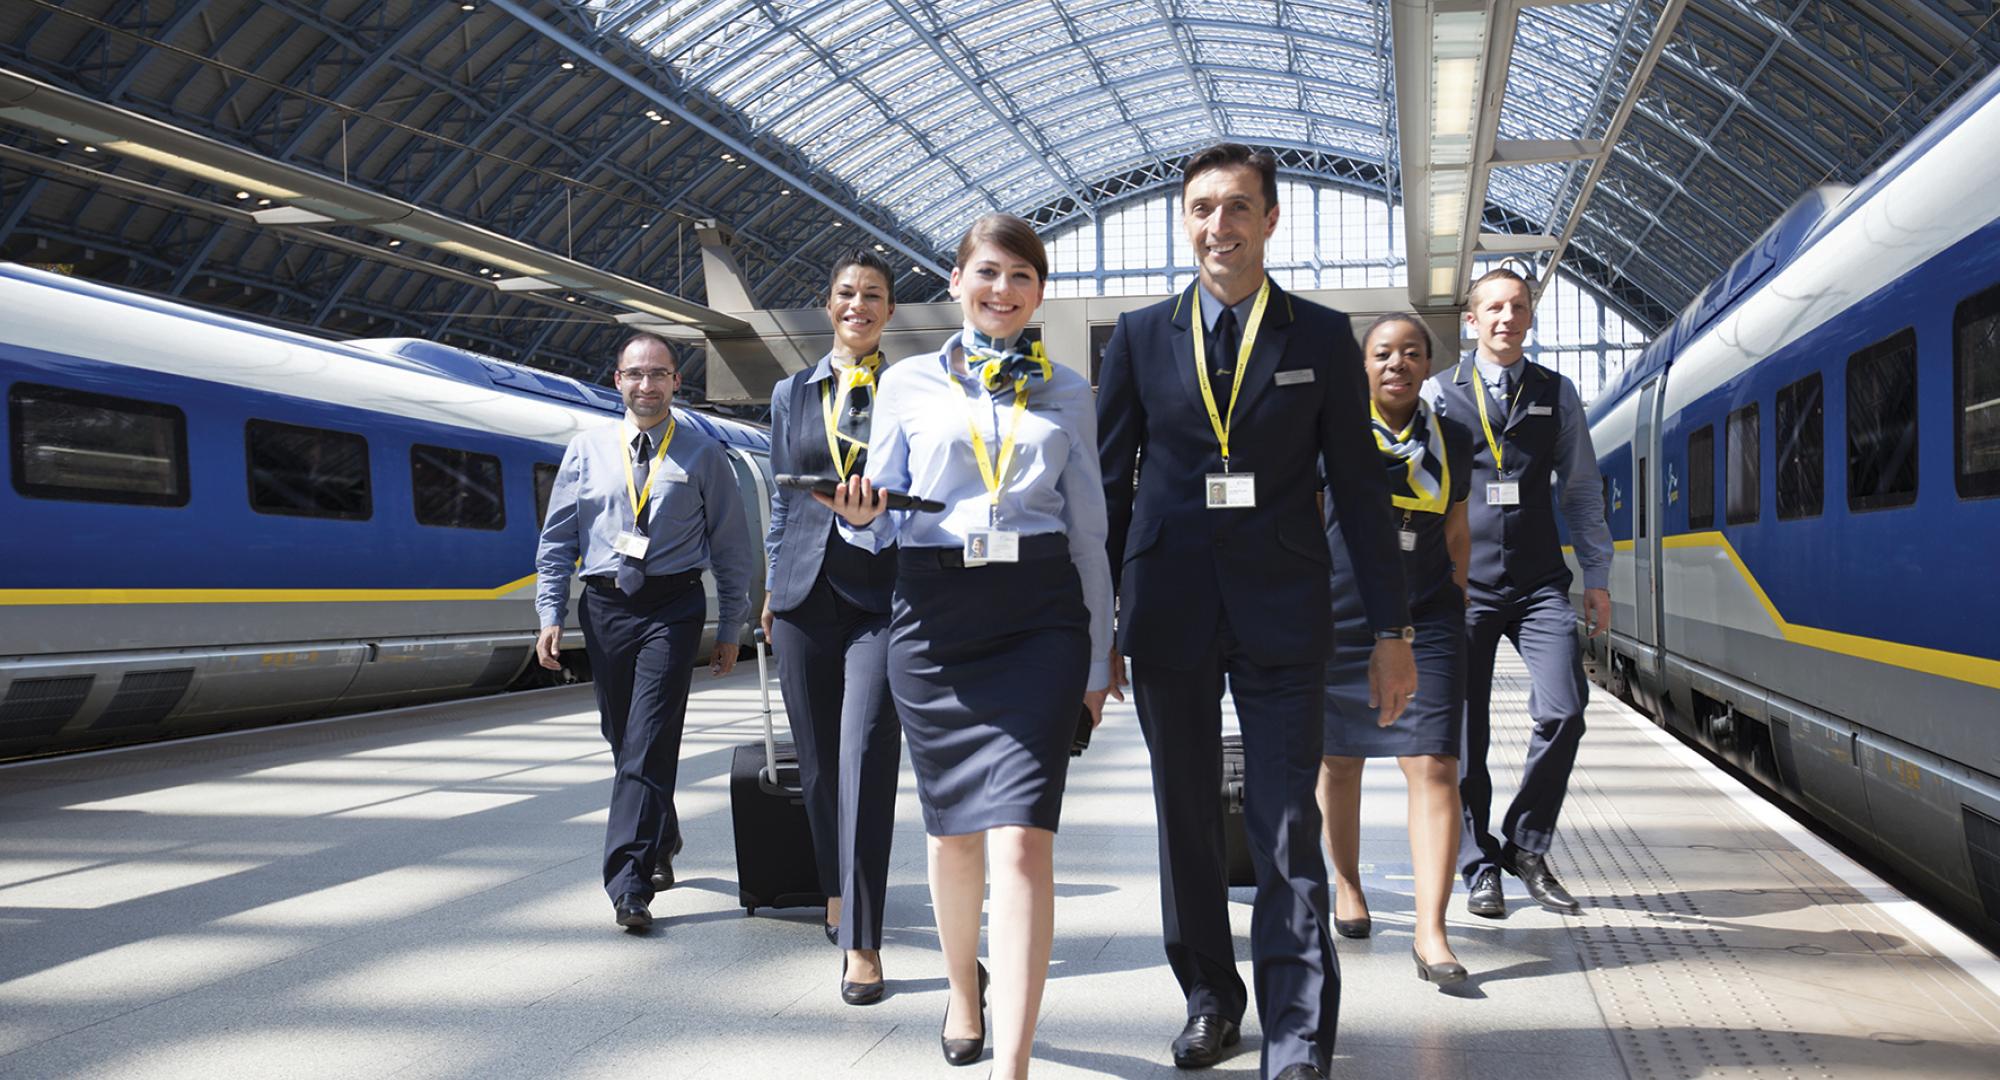 Eurostar staff in uniform